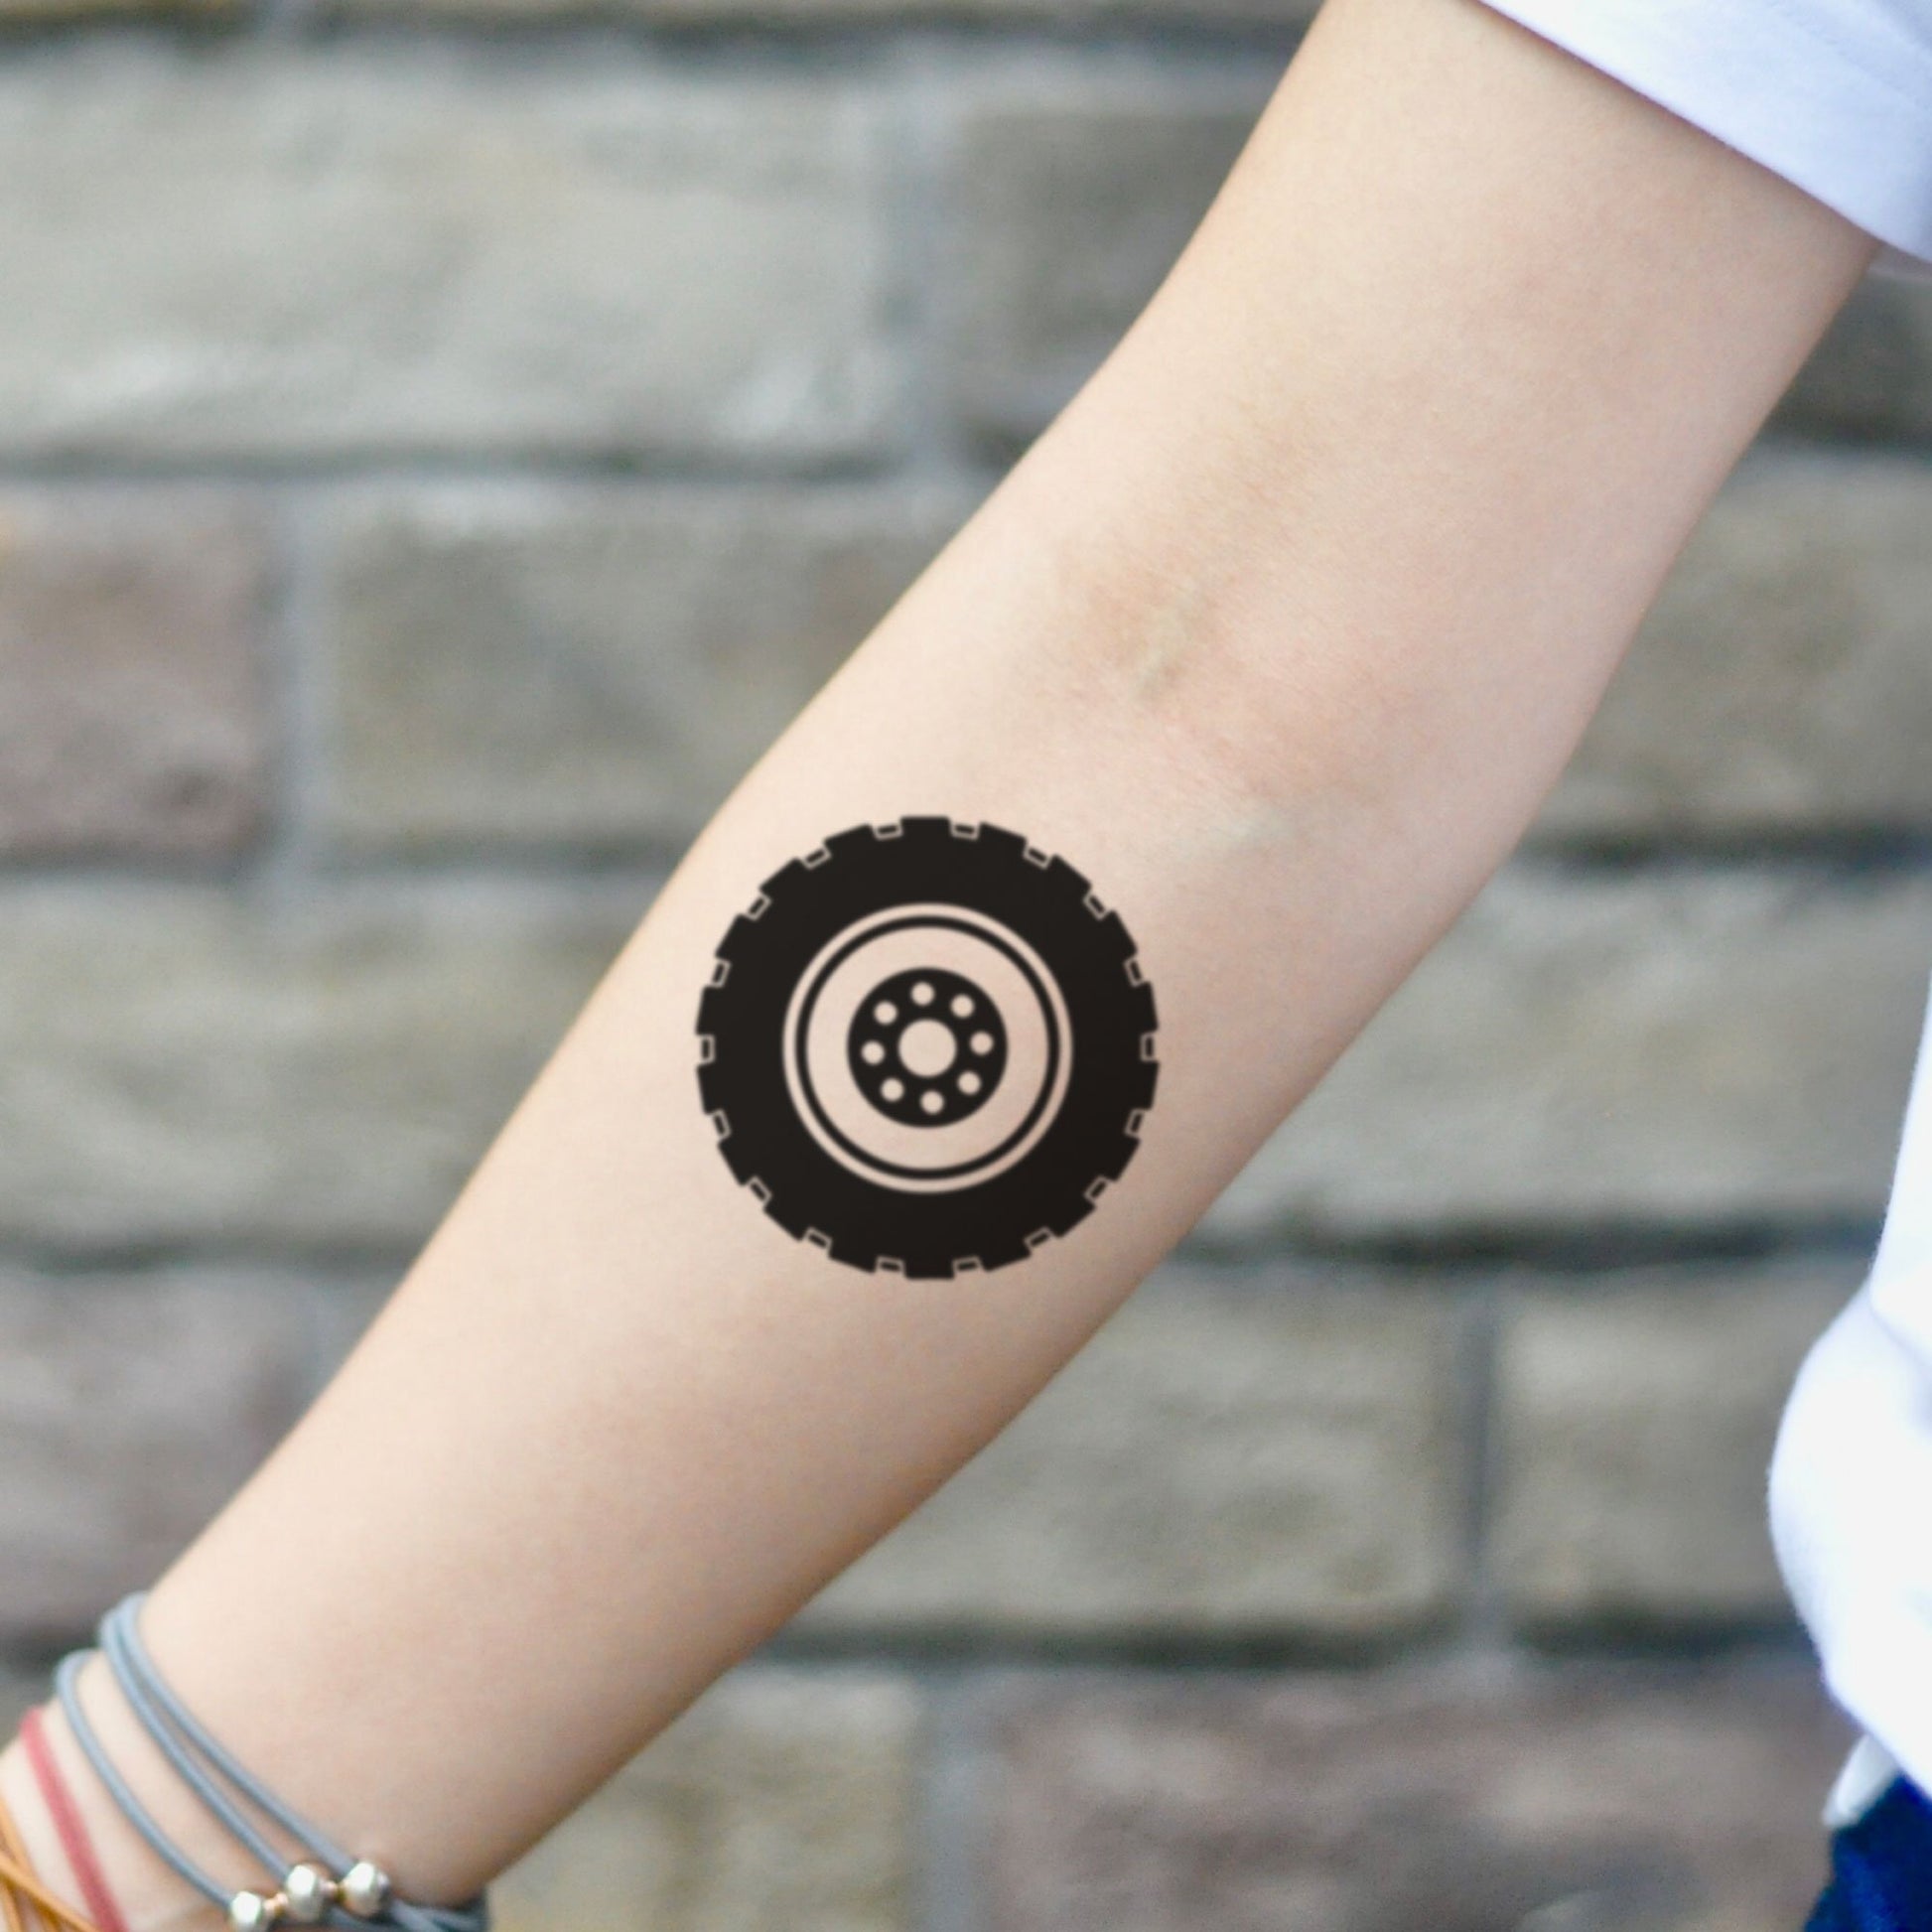 fake small tire motorcycle car wheel geometric temporary tattoo sticker design idea on inner arm